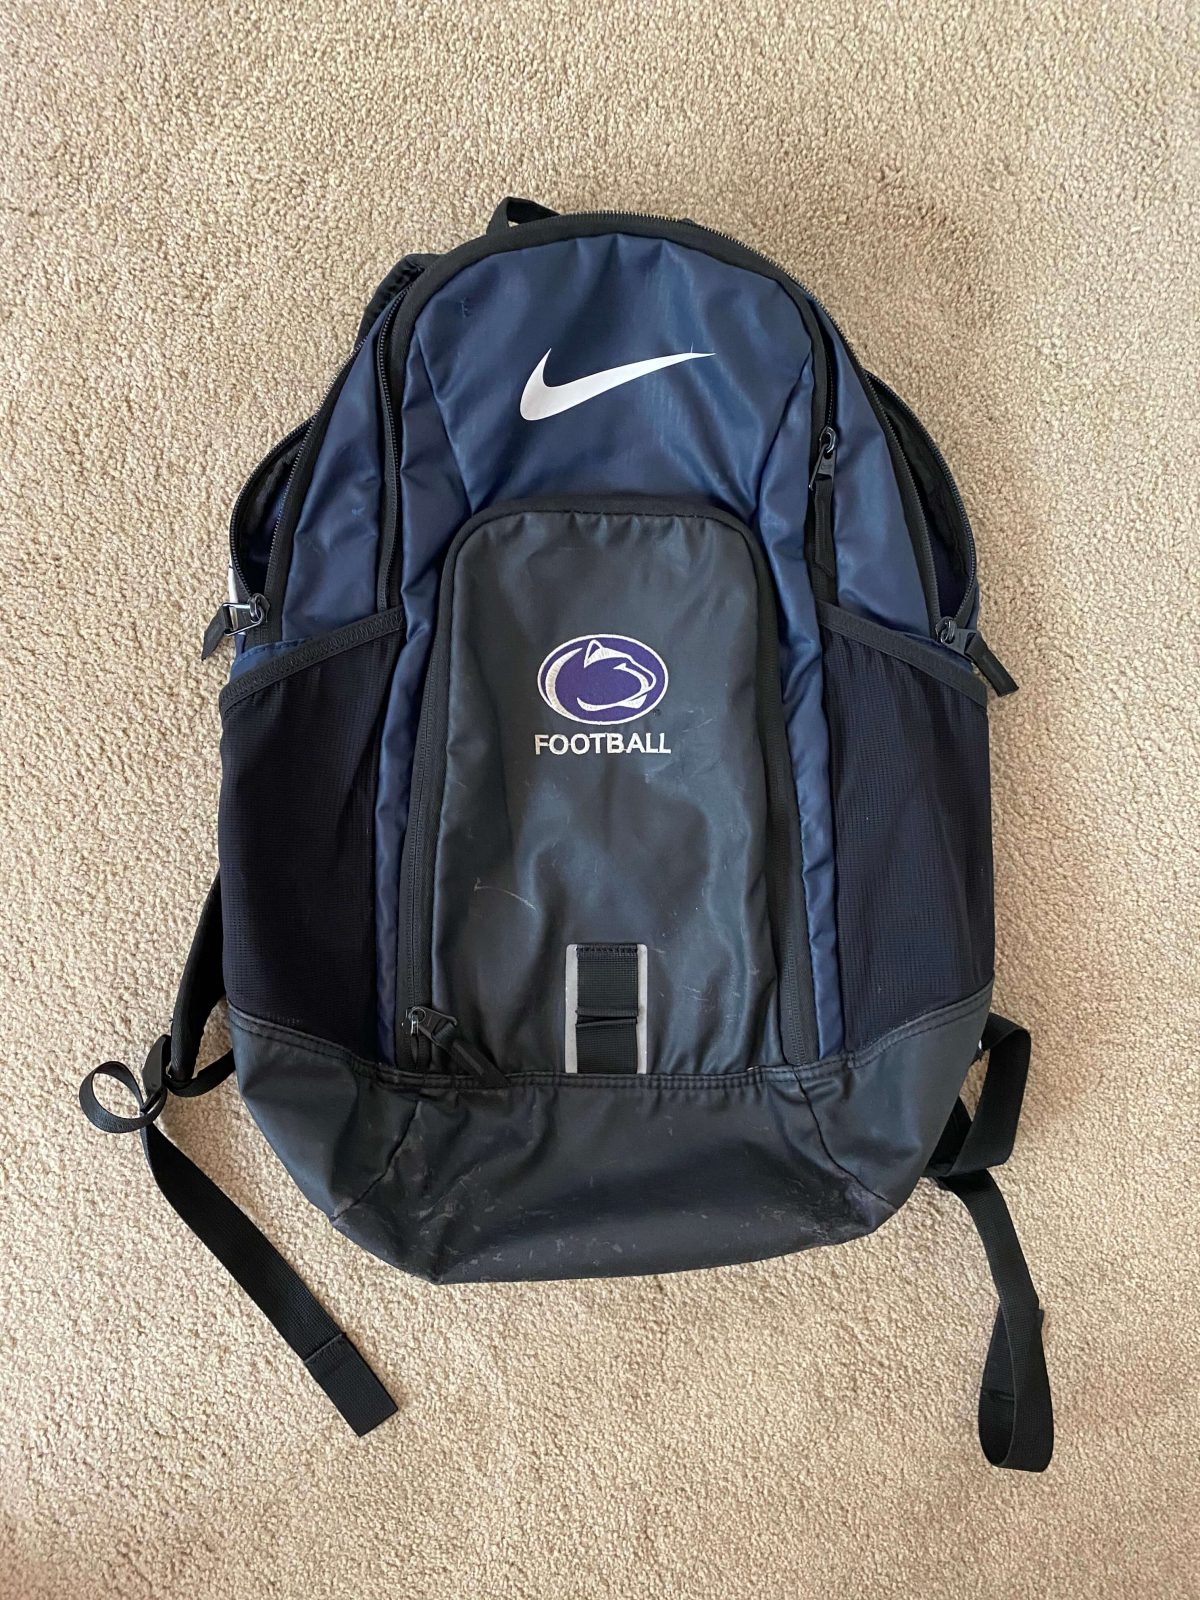 Penn State Football Backpack : NARP Clothing